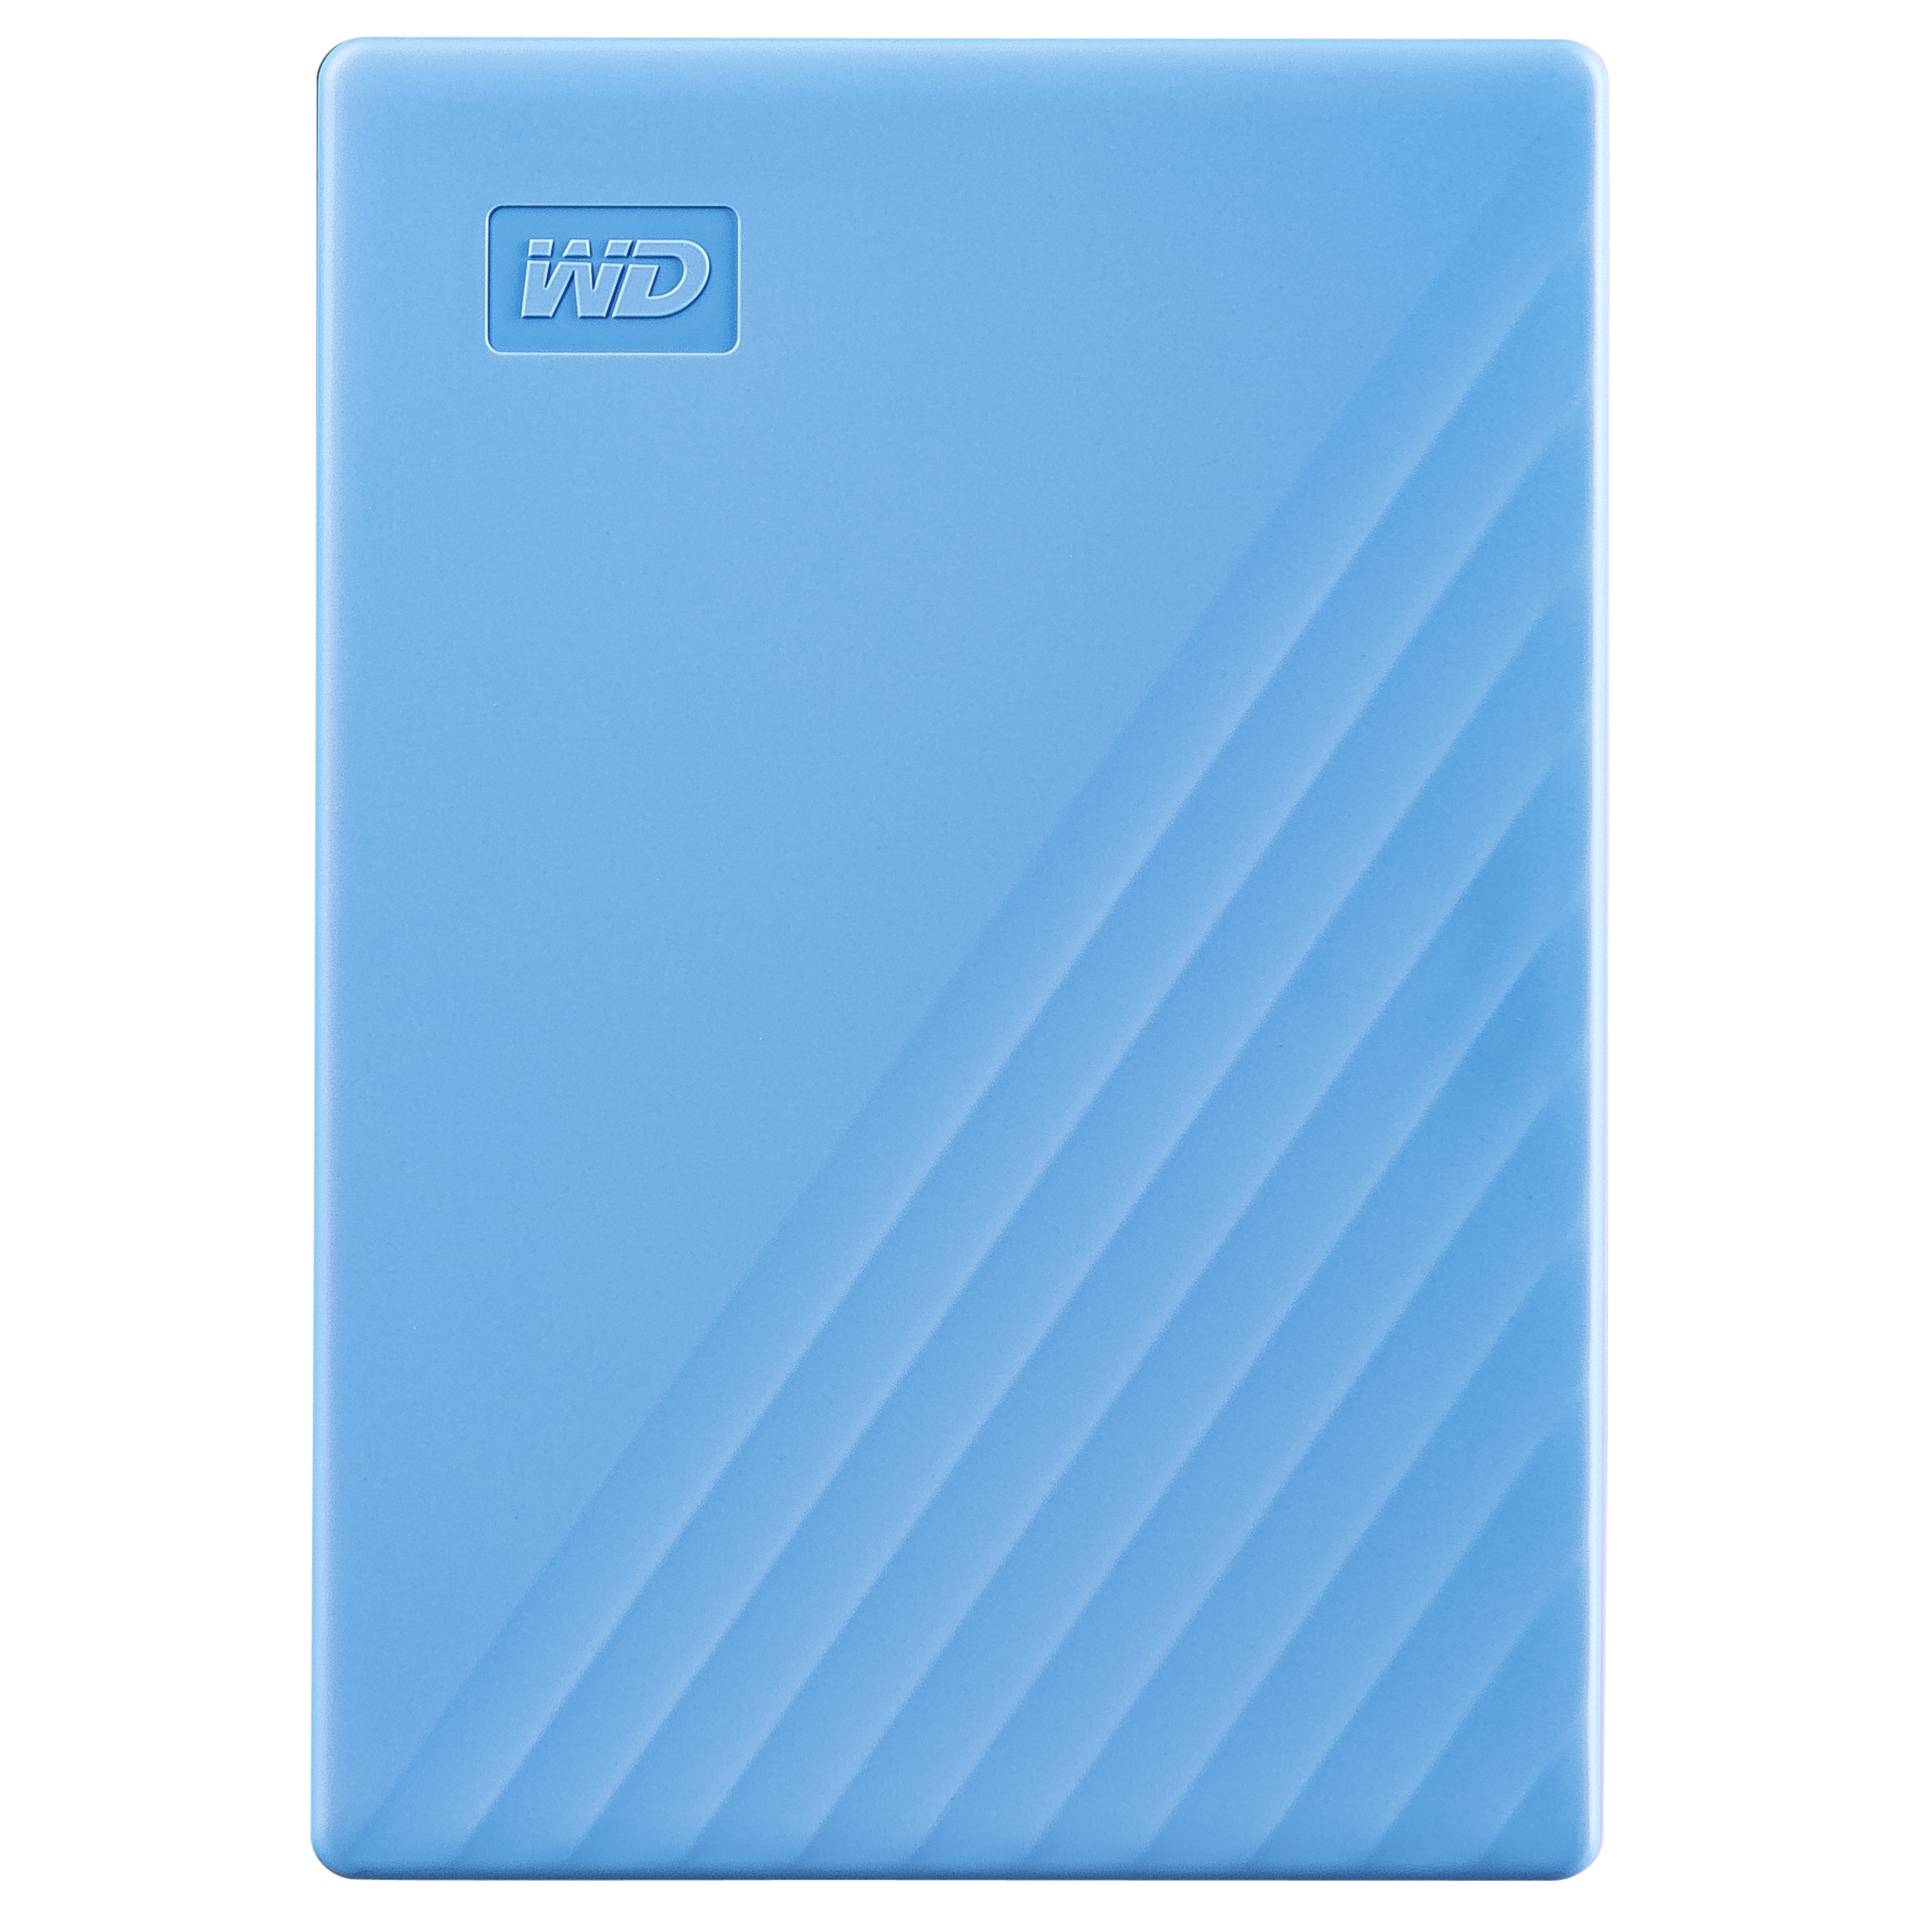 Western Digital My Passport 4TB blu HDD USB 3.0 nuovo